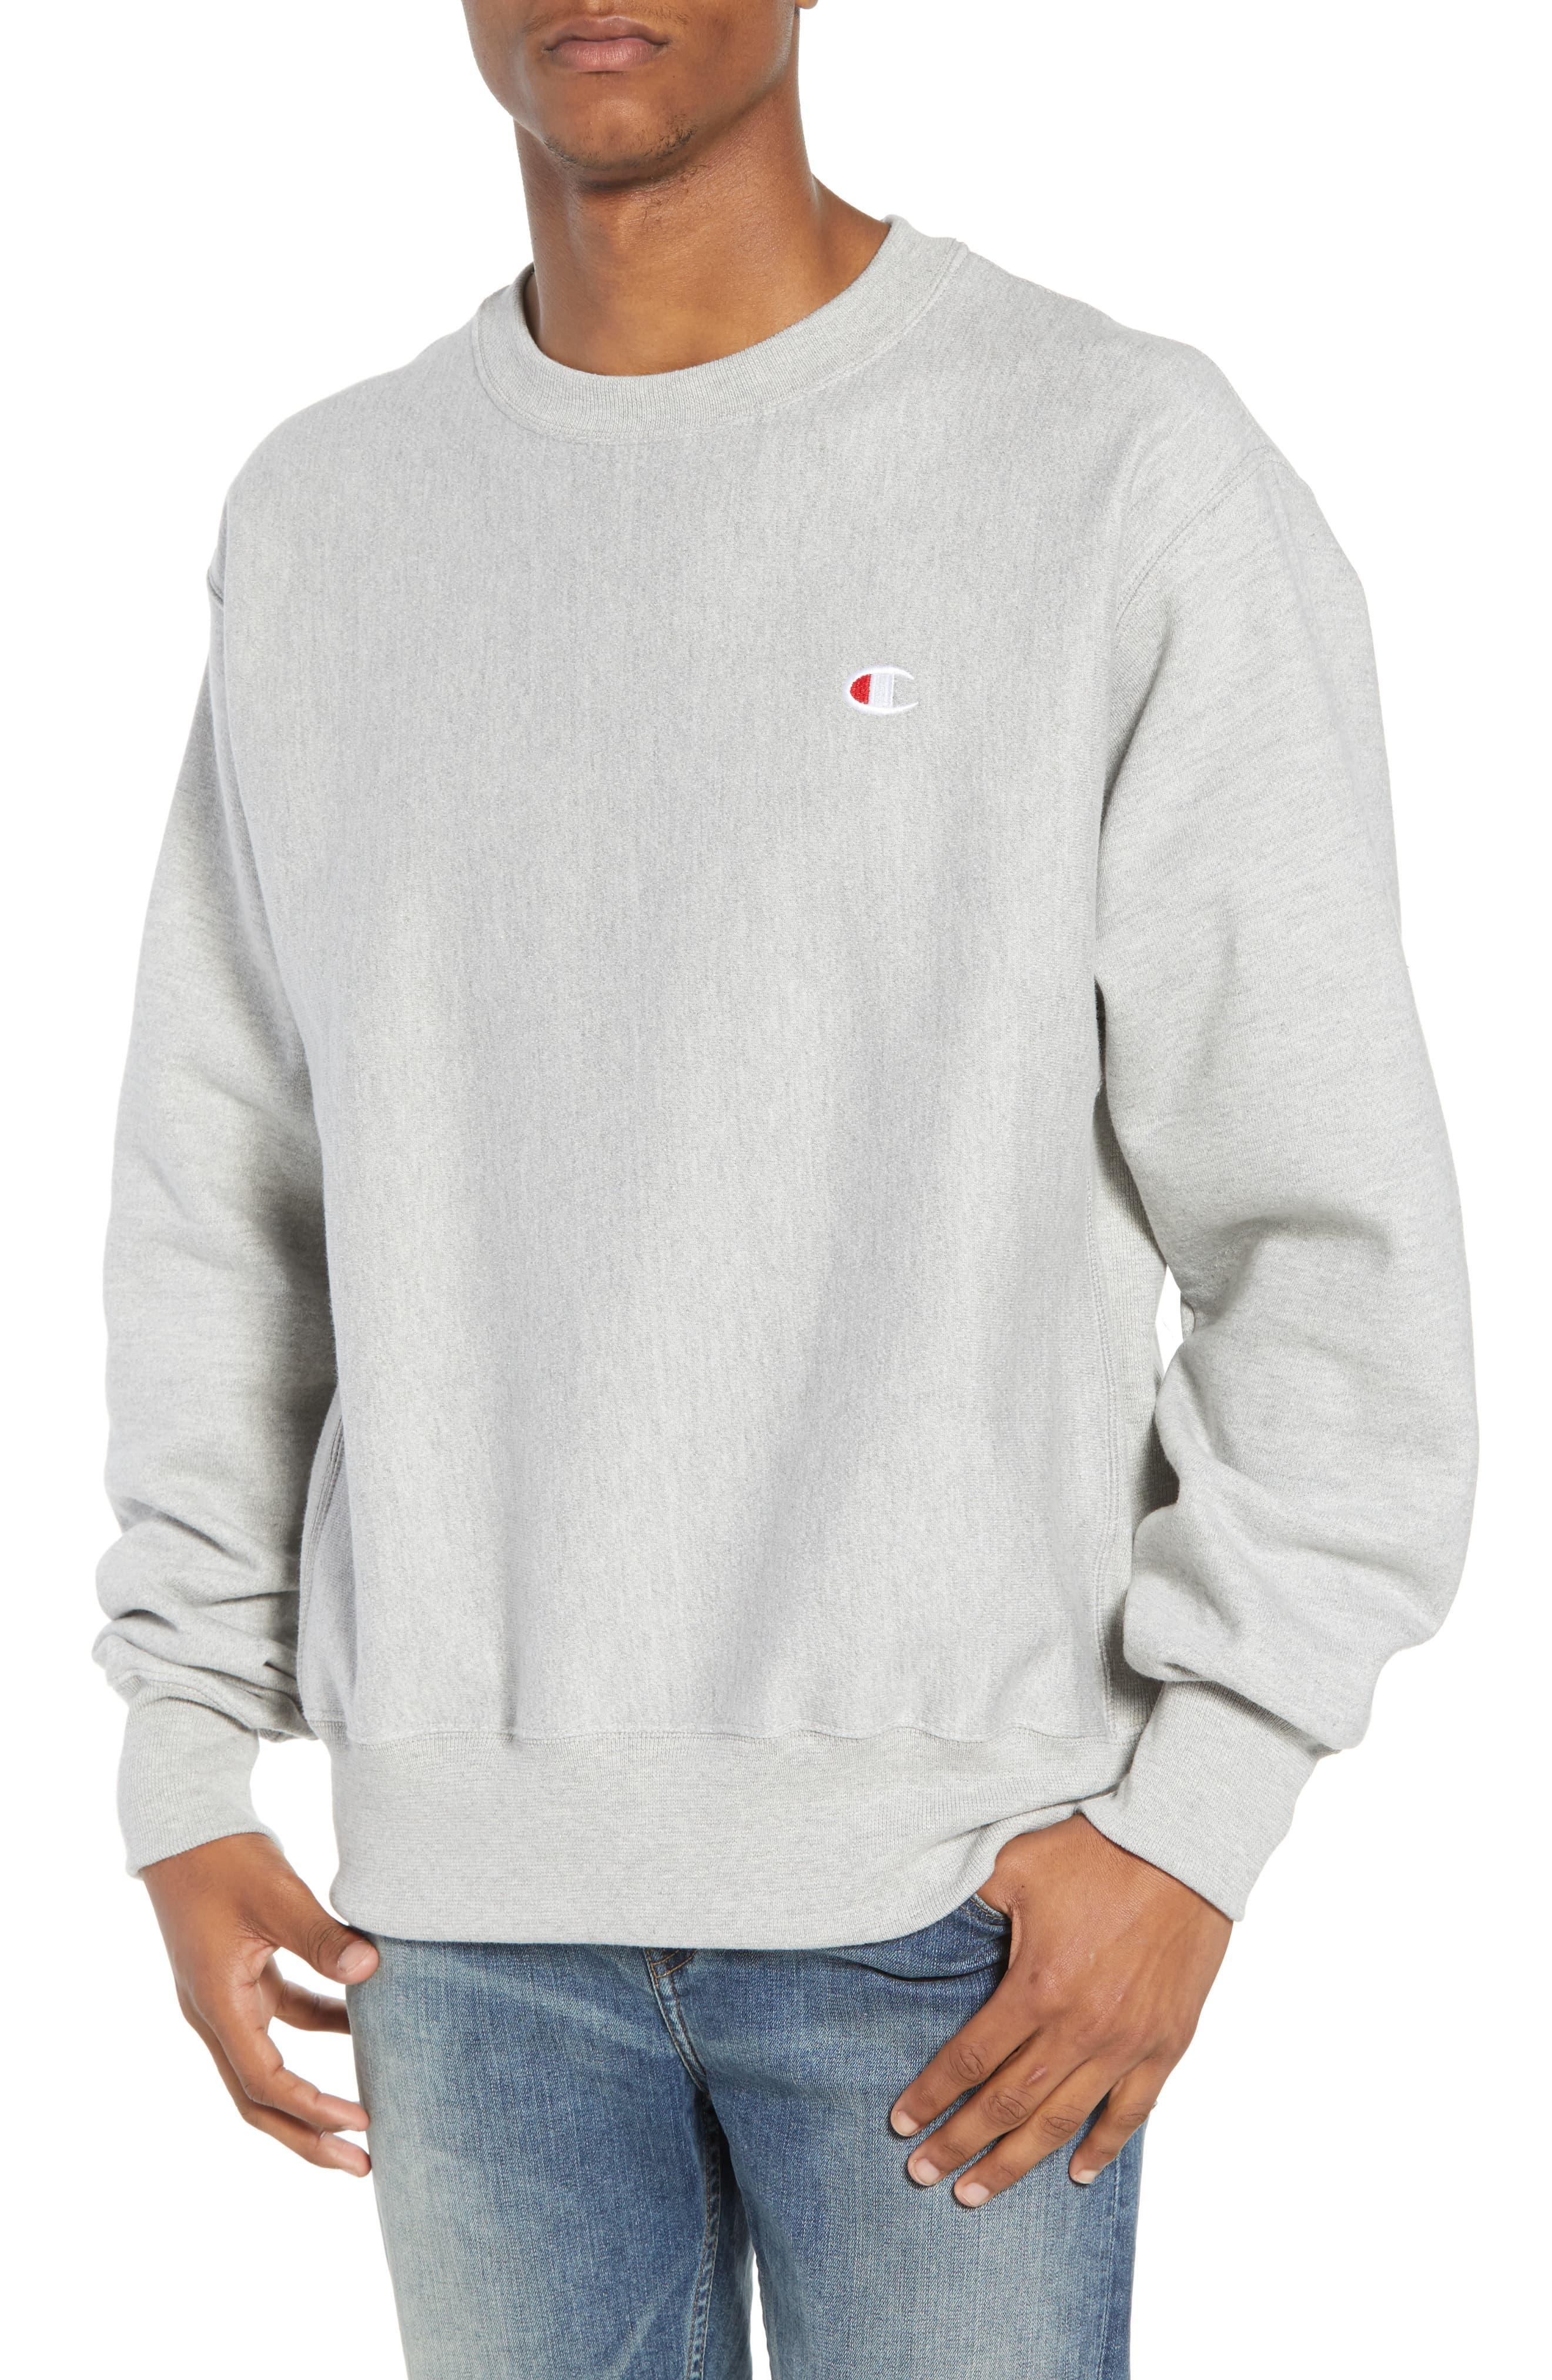 Champion Cotton Reverse Weave Crew Sweatshirt in Gray for Men - Save 10 ...